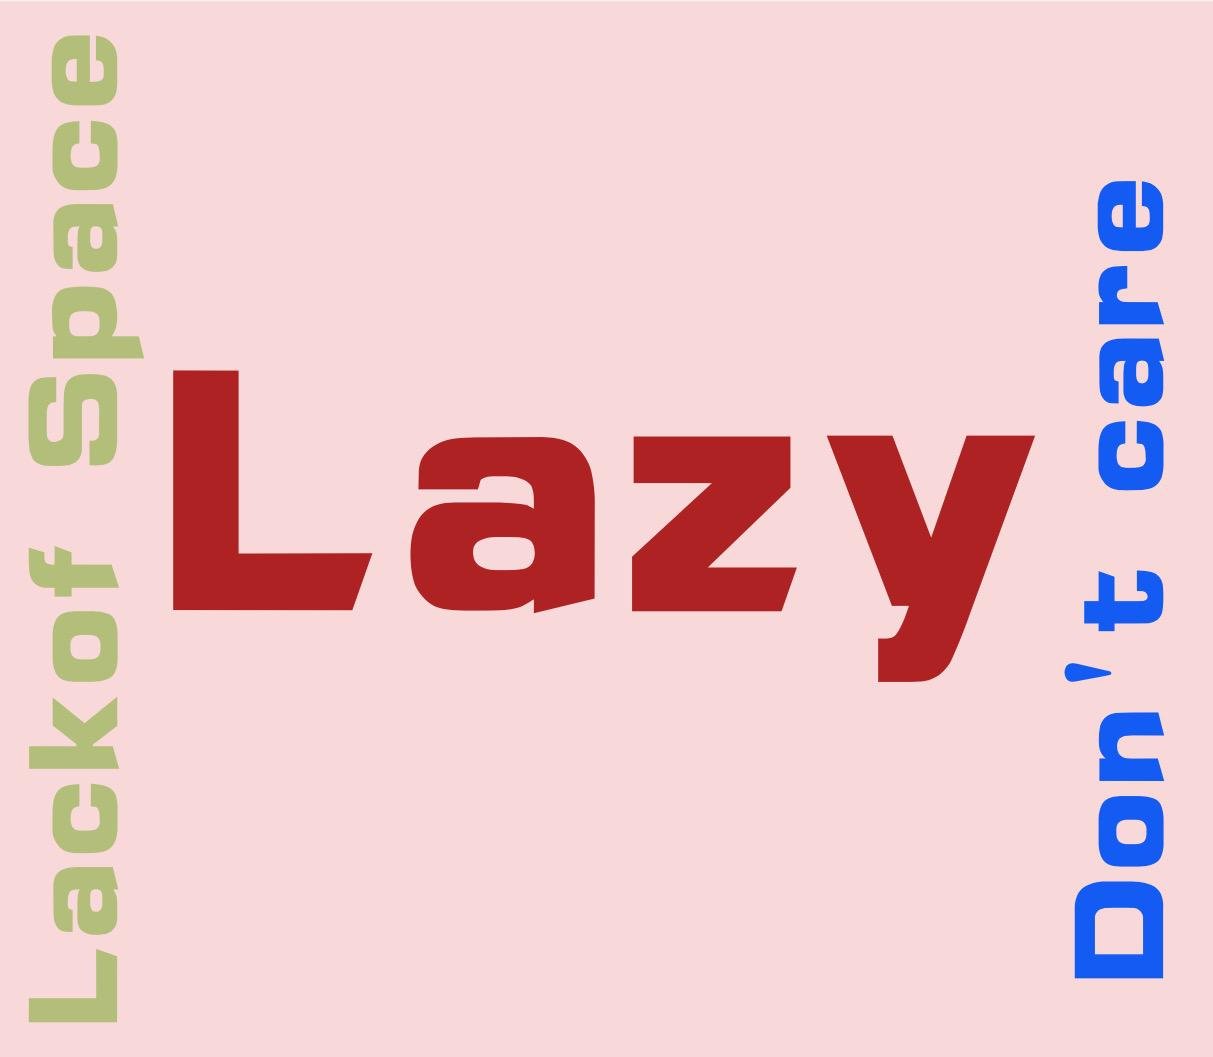 词云图,文字云图,Lazy,Lackof Space,Don't care